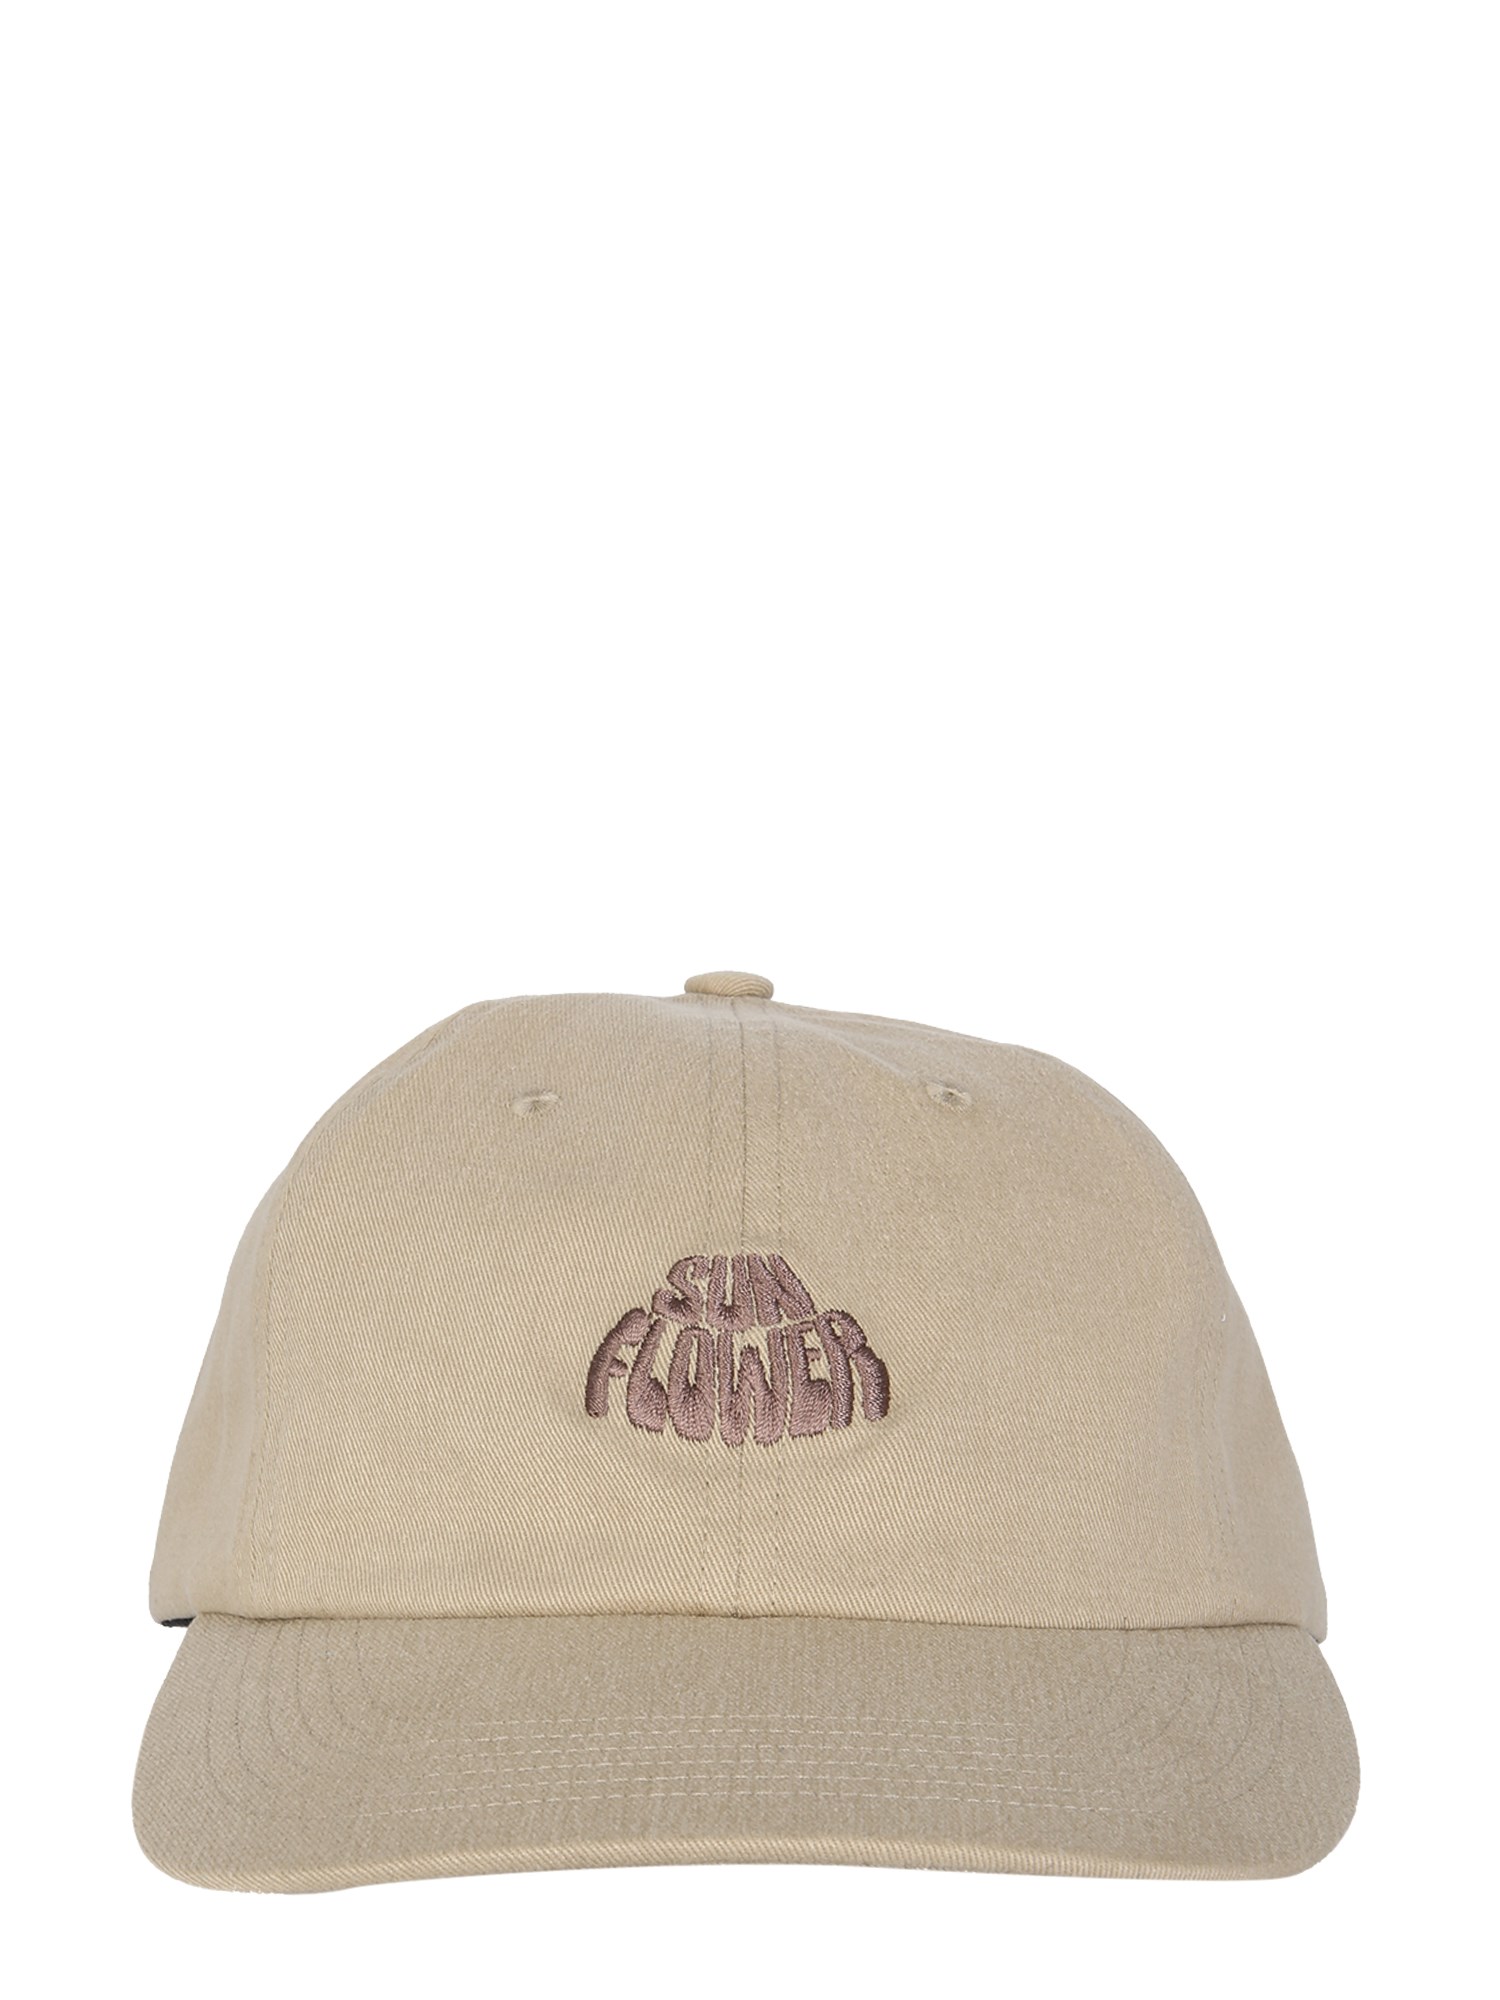 sunflower baseball hat with logo